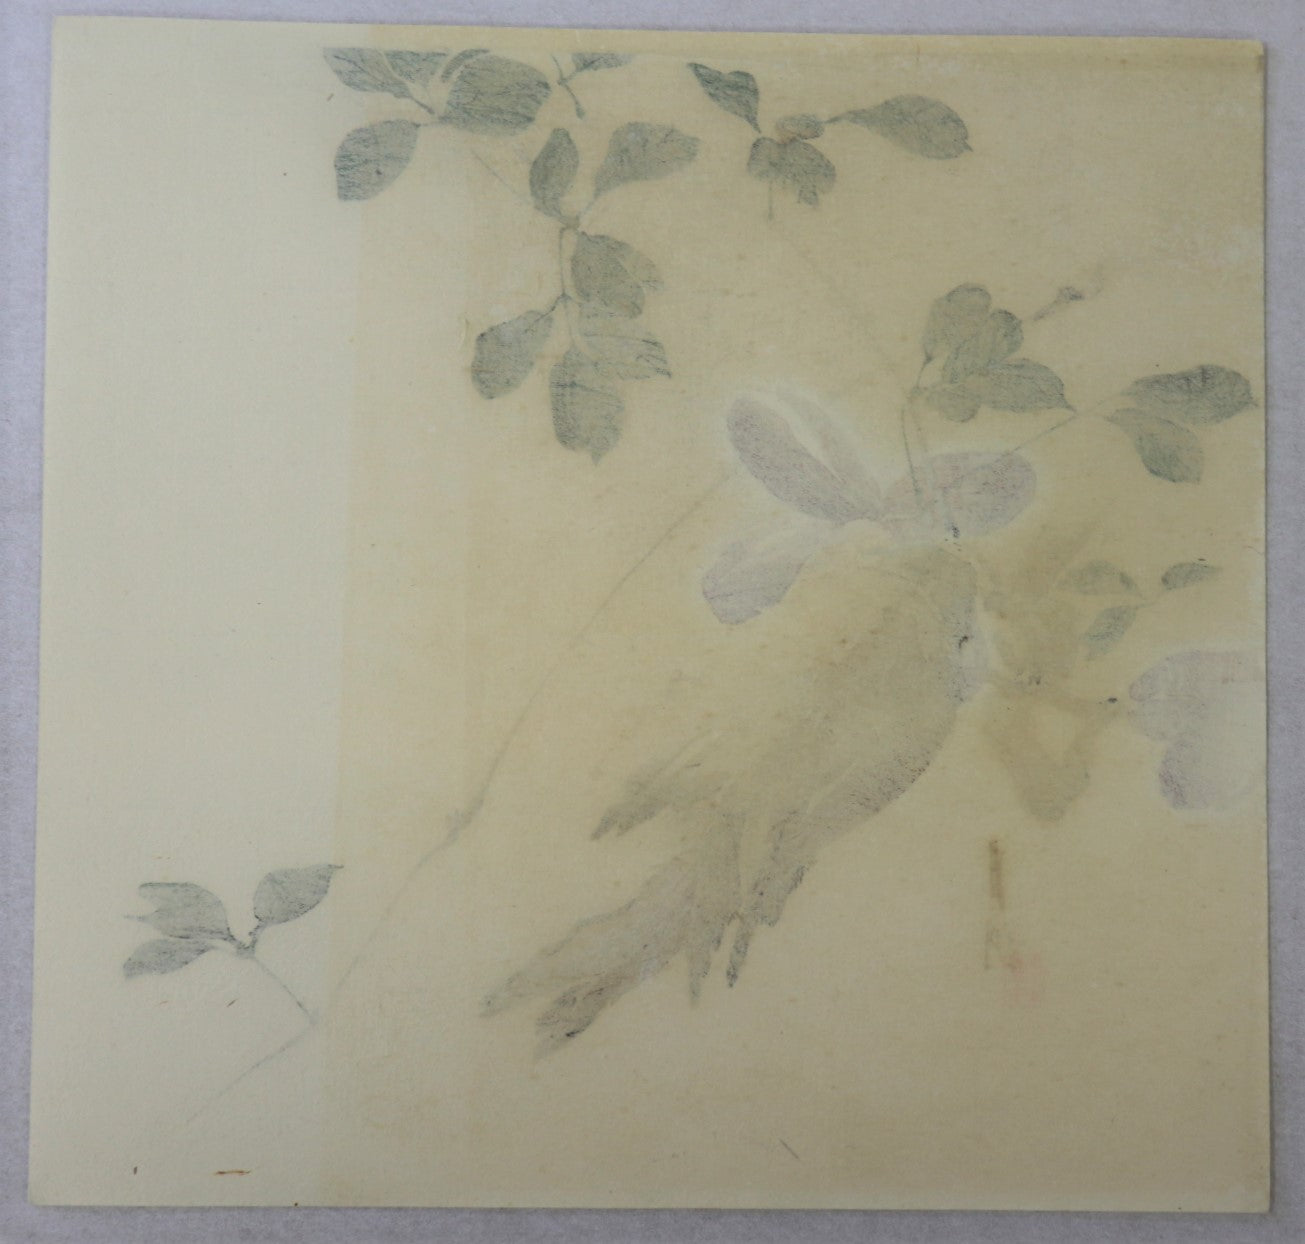 Sparrow feeding by Gekko / Moineau se nourissant par Gekko (1910's)